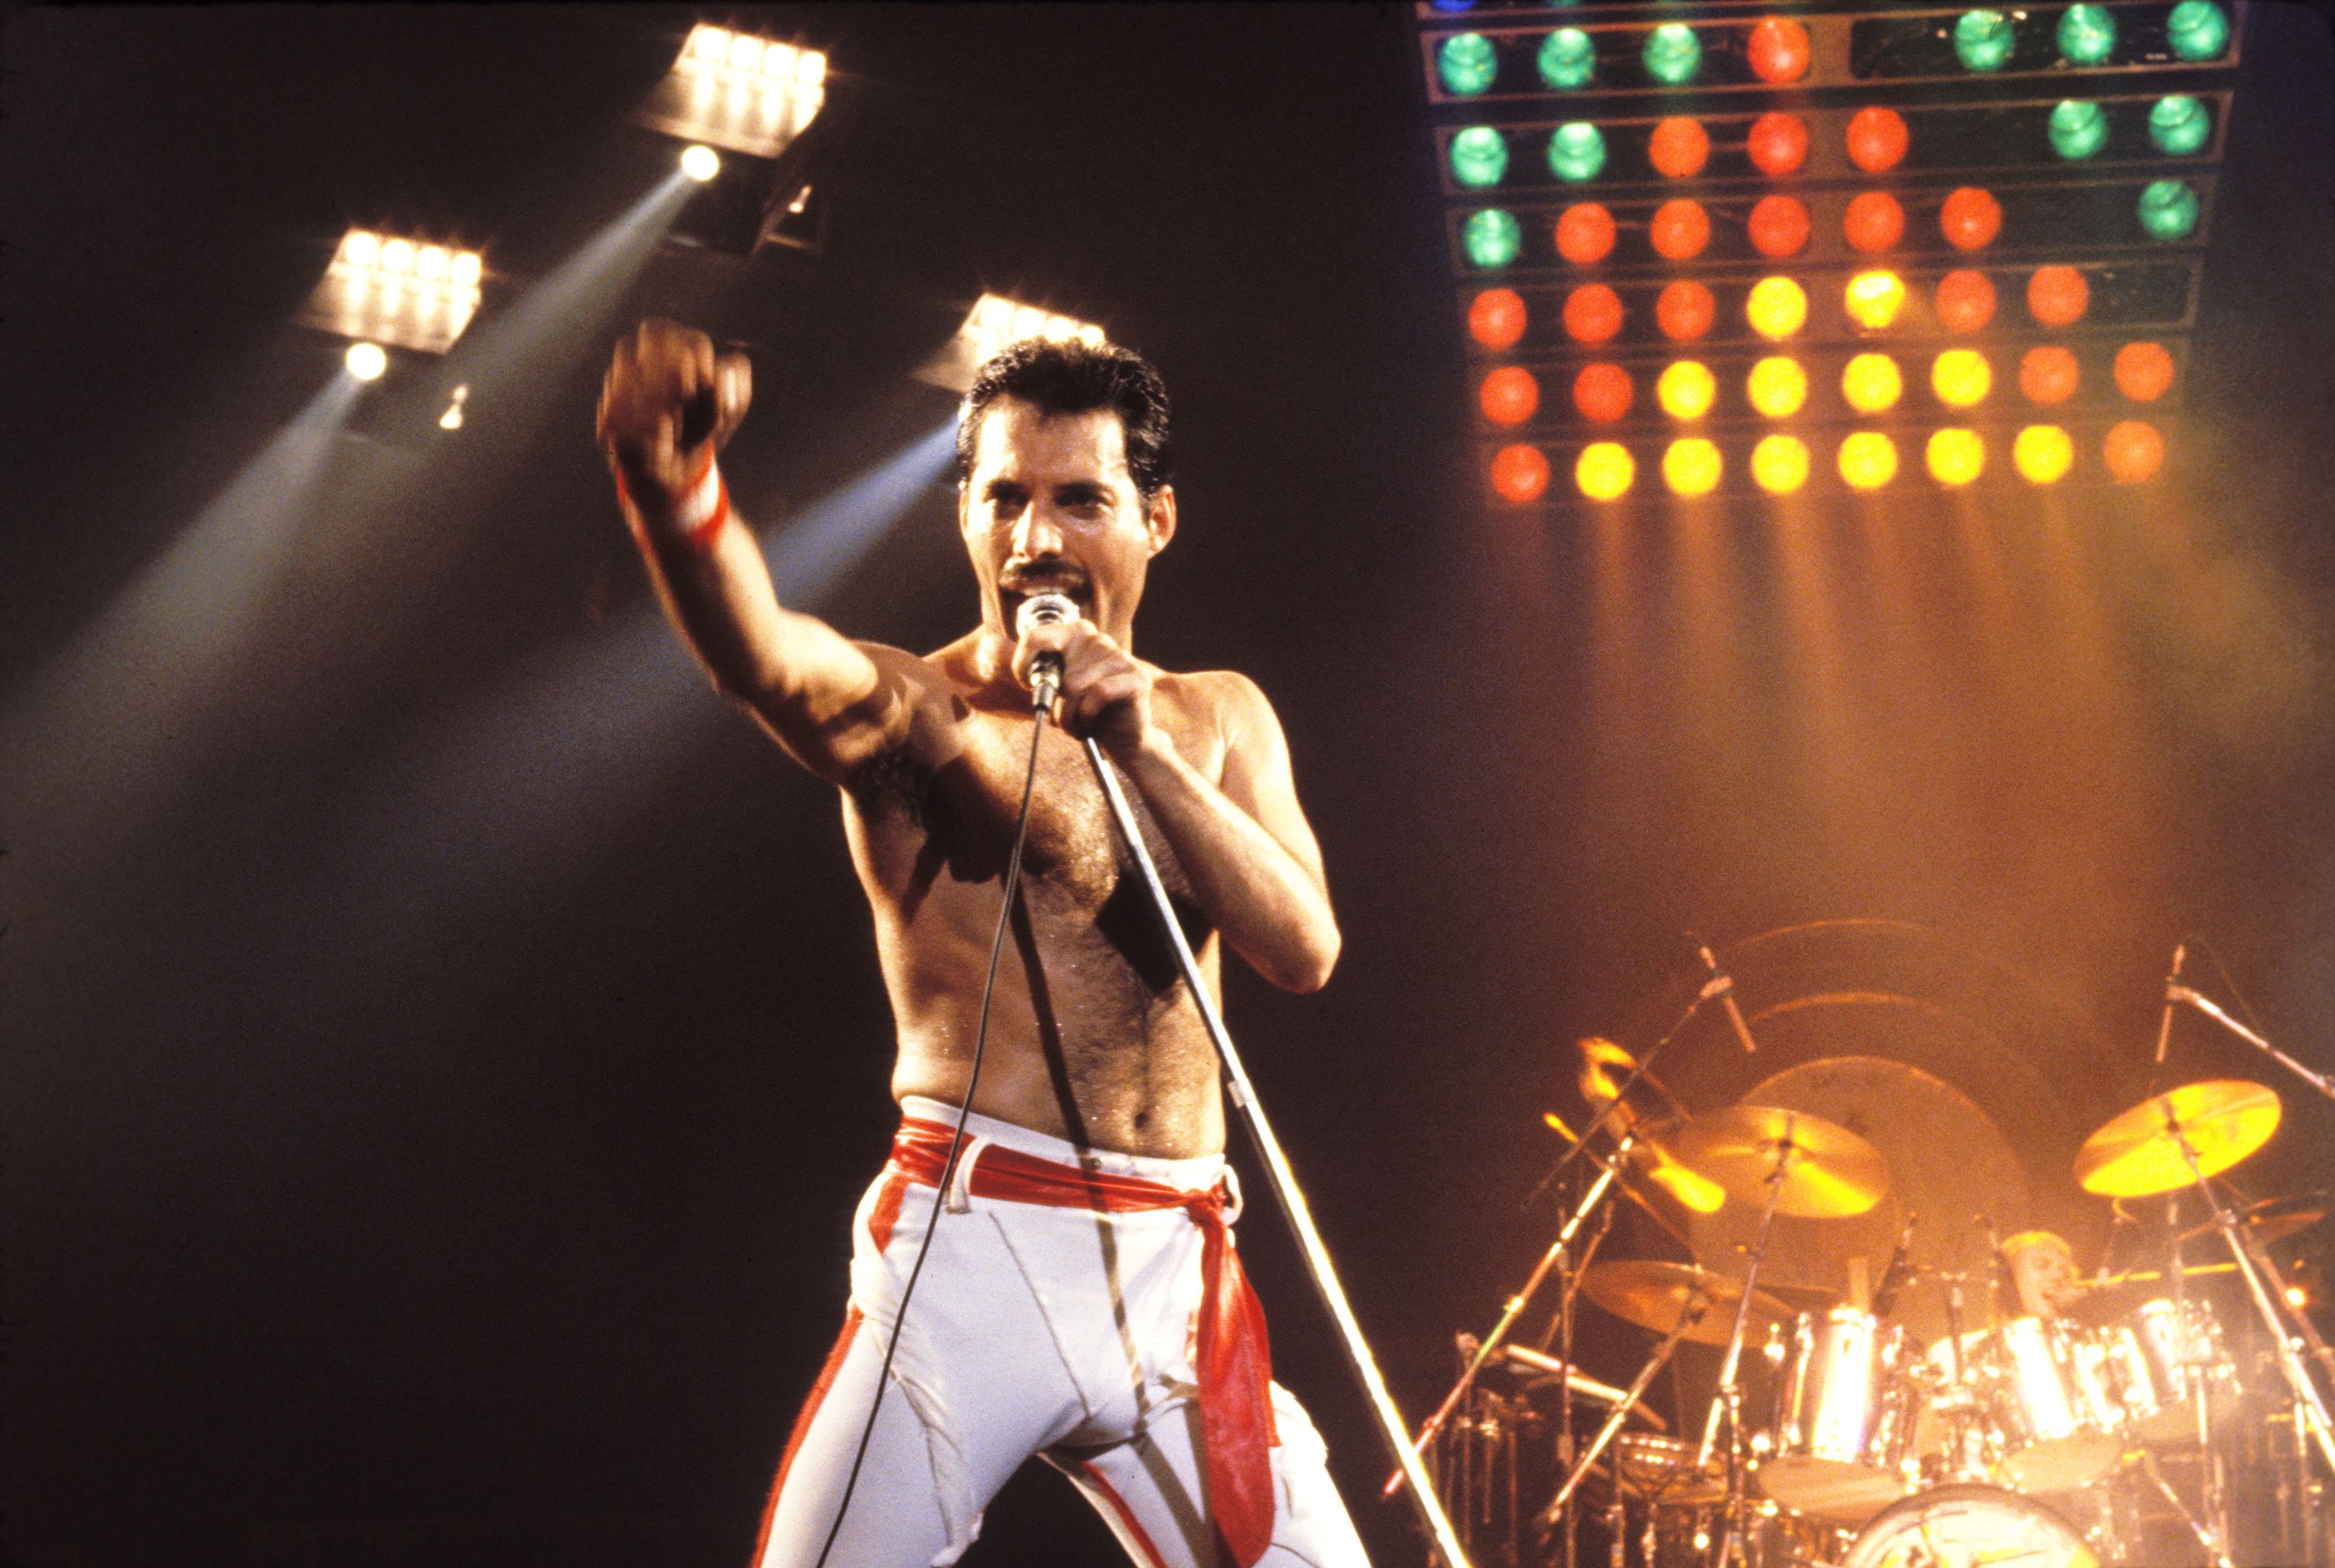 La canzone più gioiosa di sempre è dei Queen  --- (Fonte immagine: https://hips.hearstapps.com/hmg-prod/images/freddie-mercury-of-queen-1982-tour-at-the-various-locations-news-photo-1663668765.jpg)